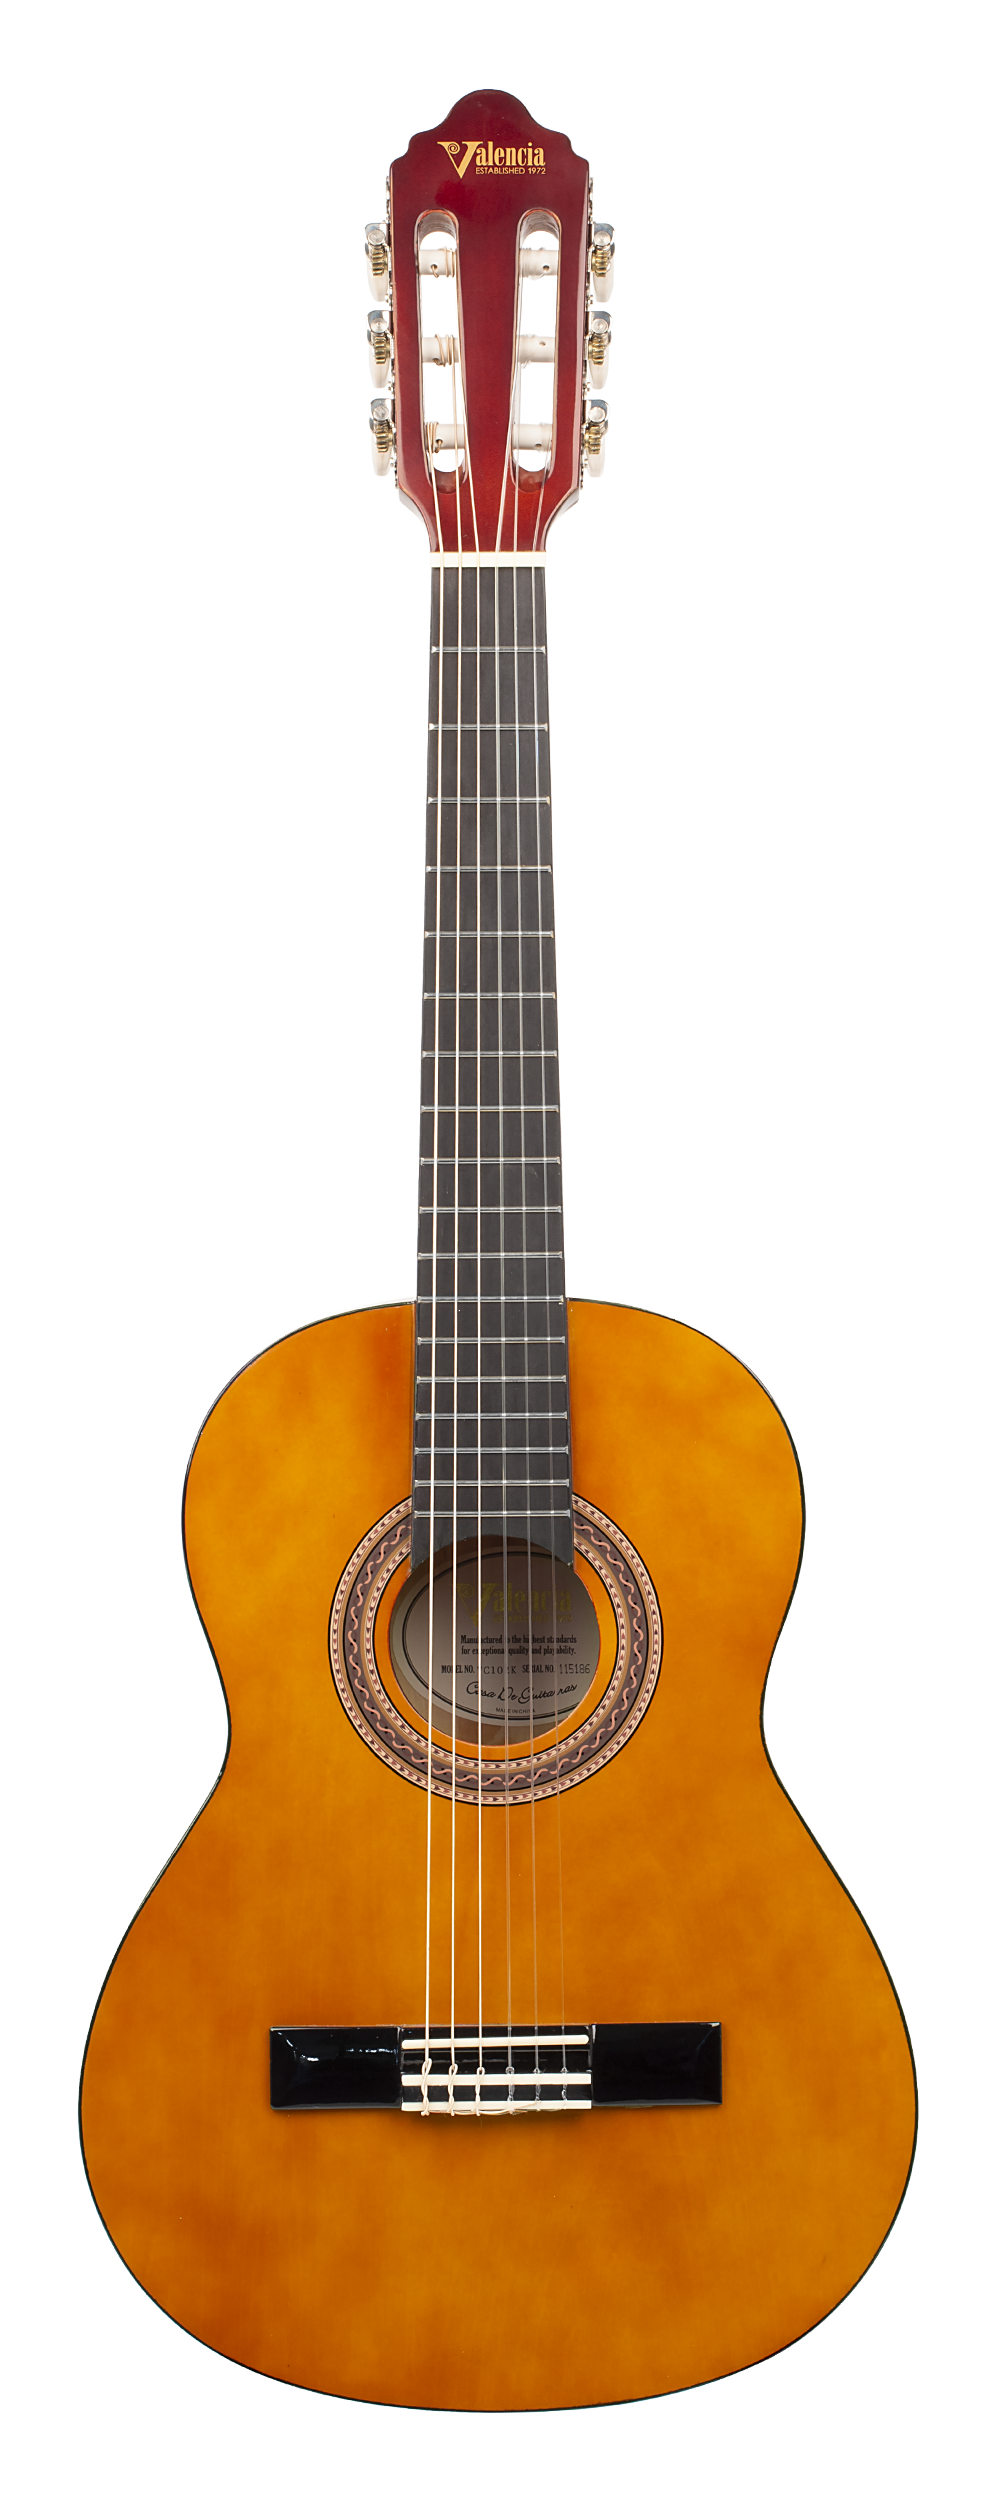 100 Series – Valencia Guitars